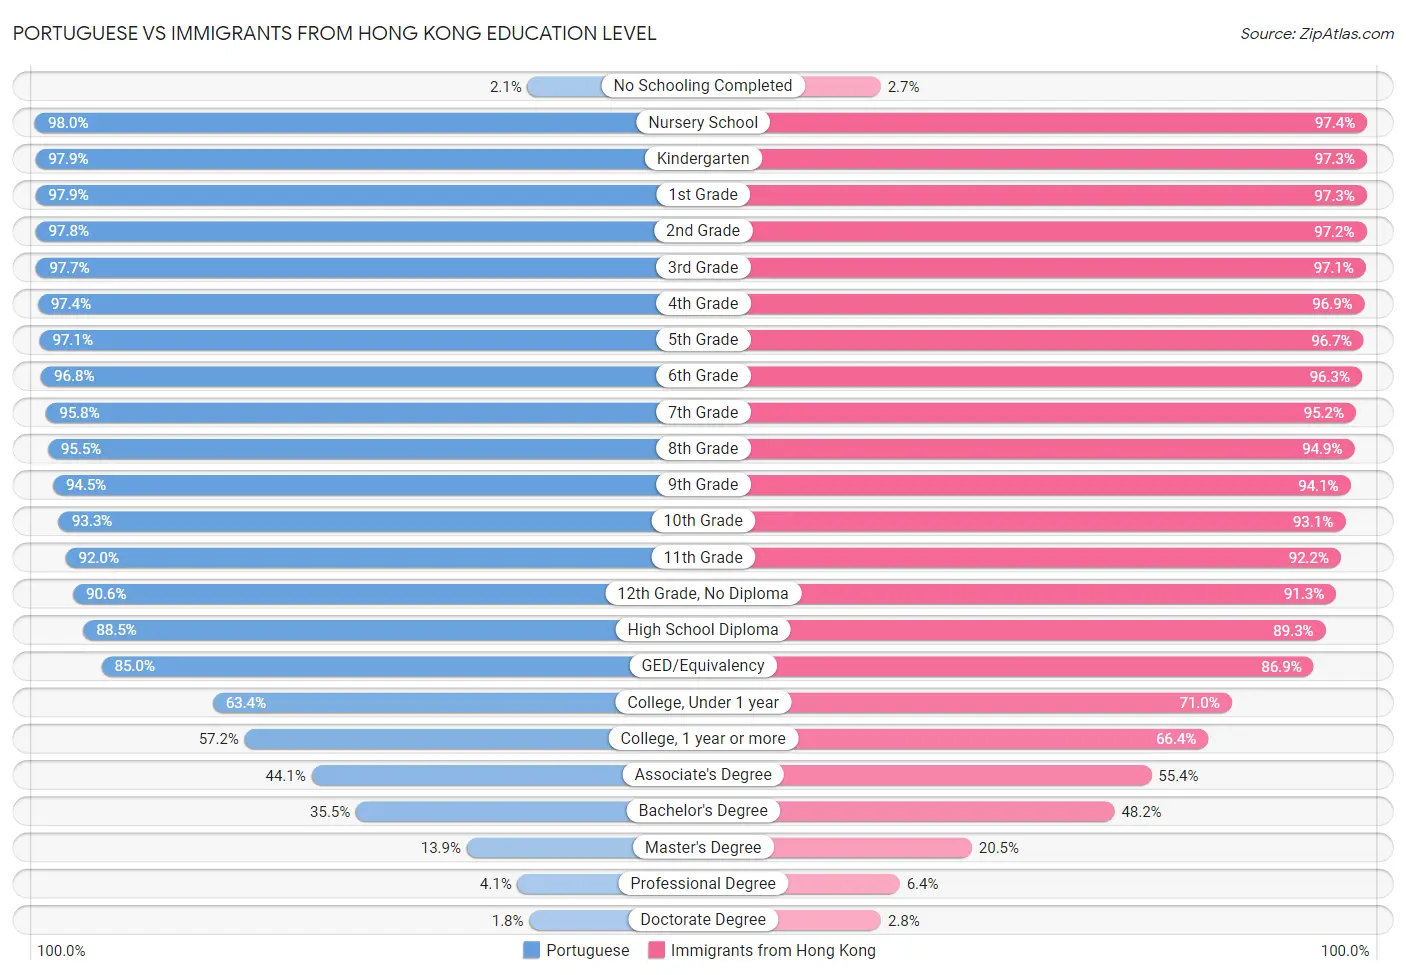 Portuguese vs Immigrants from Hong Kong Education Level